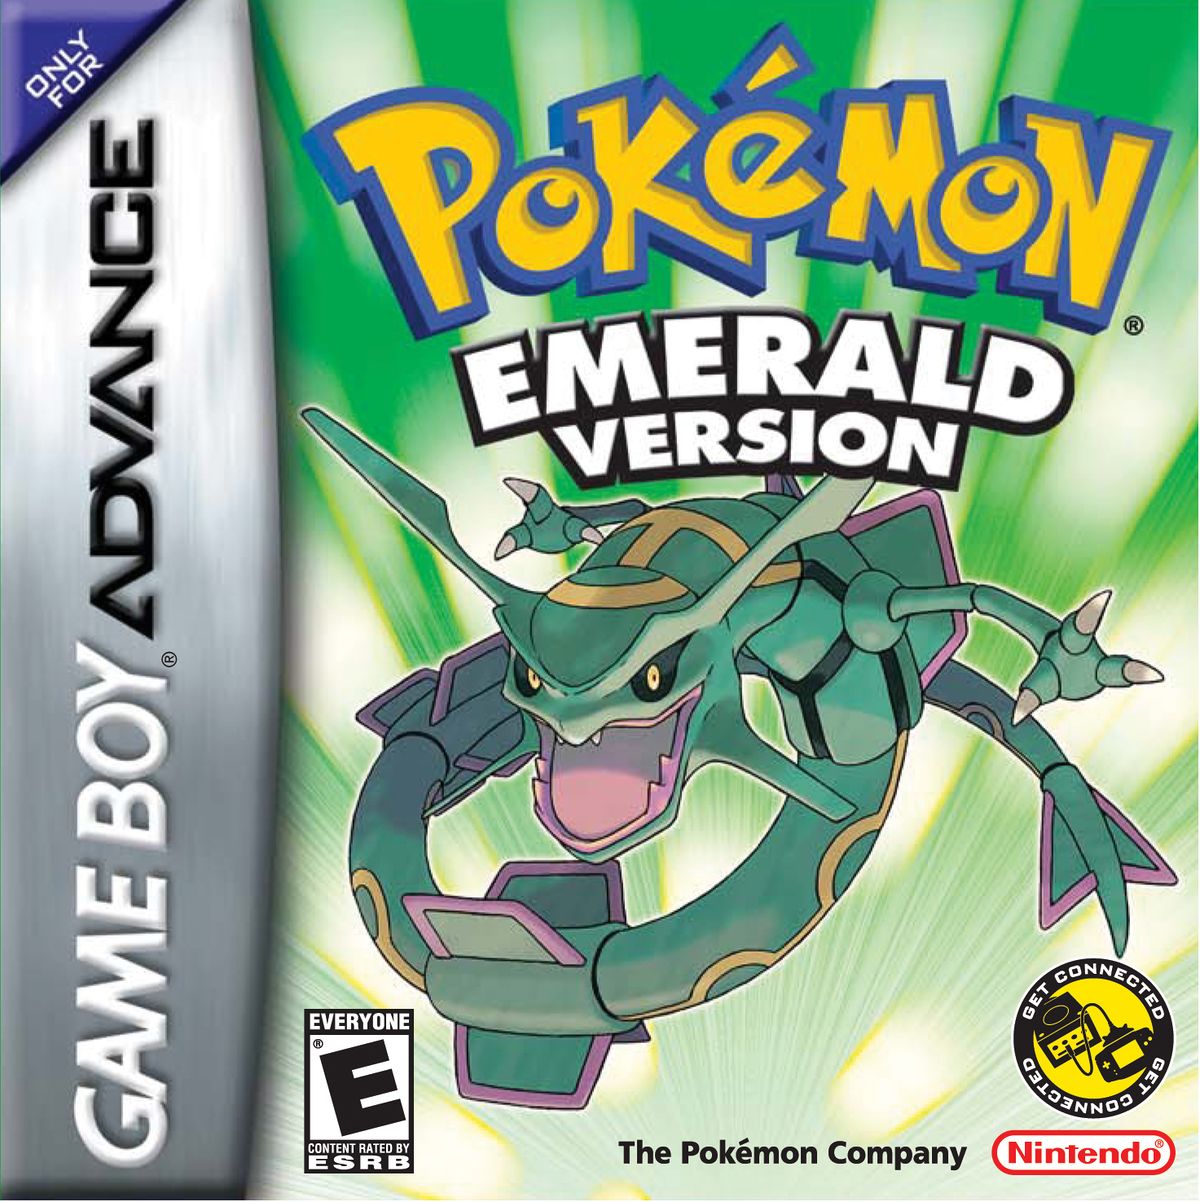 Pokémon Emerald Version - Bulbapedia, the community-driven Pokémon